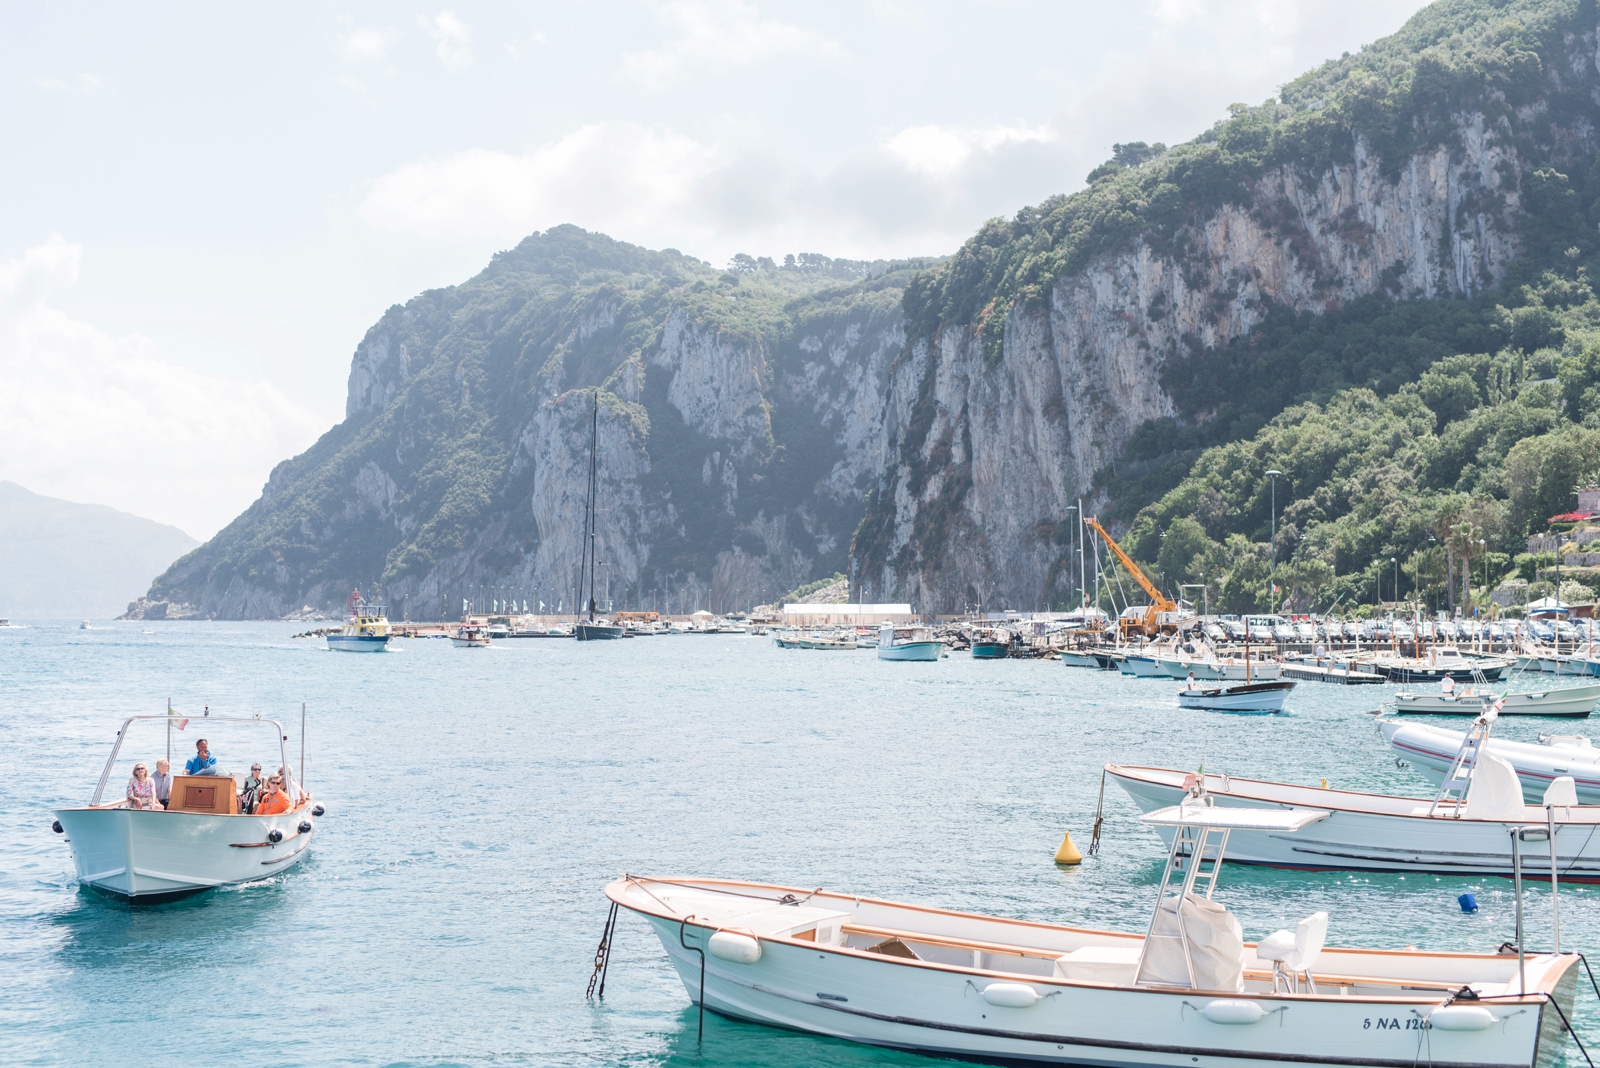 capri-italy-amalfi-coast-via-mediterranean-cruise-carnival-vista-photo_5554.jpg